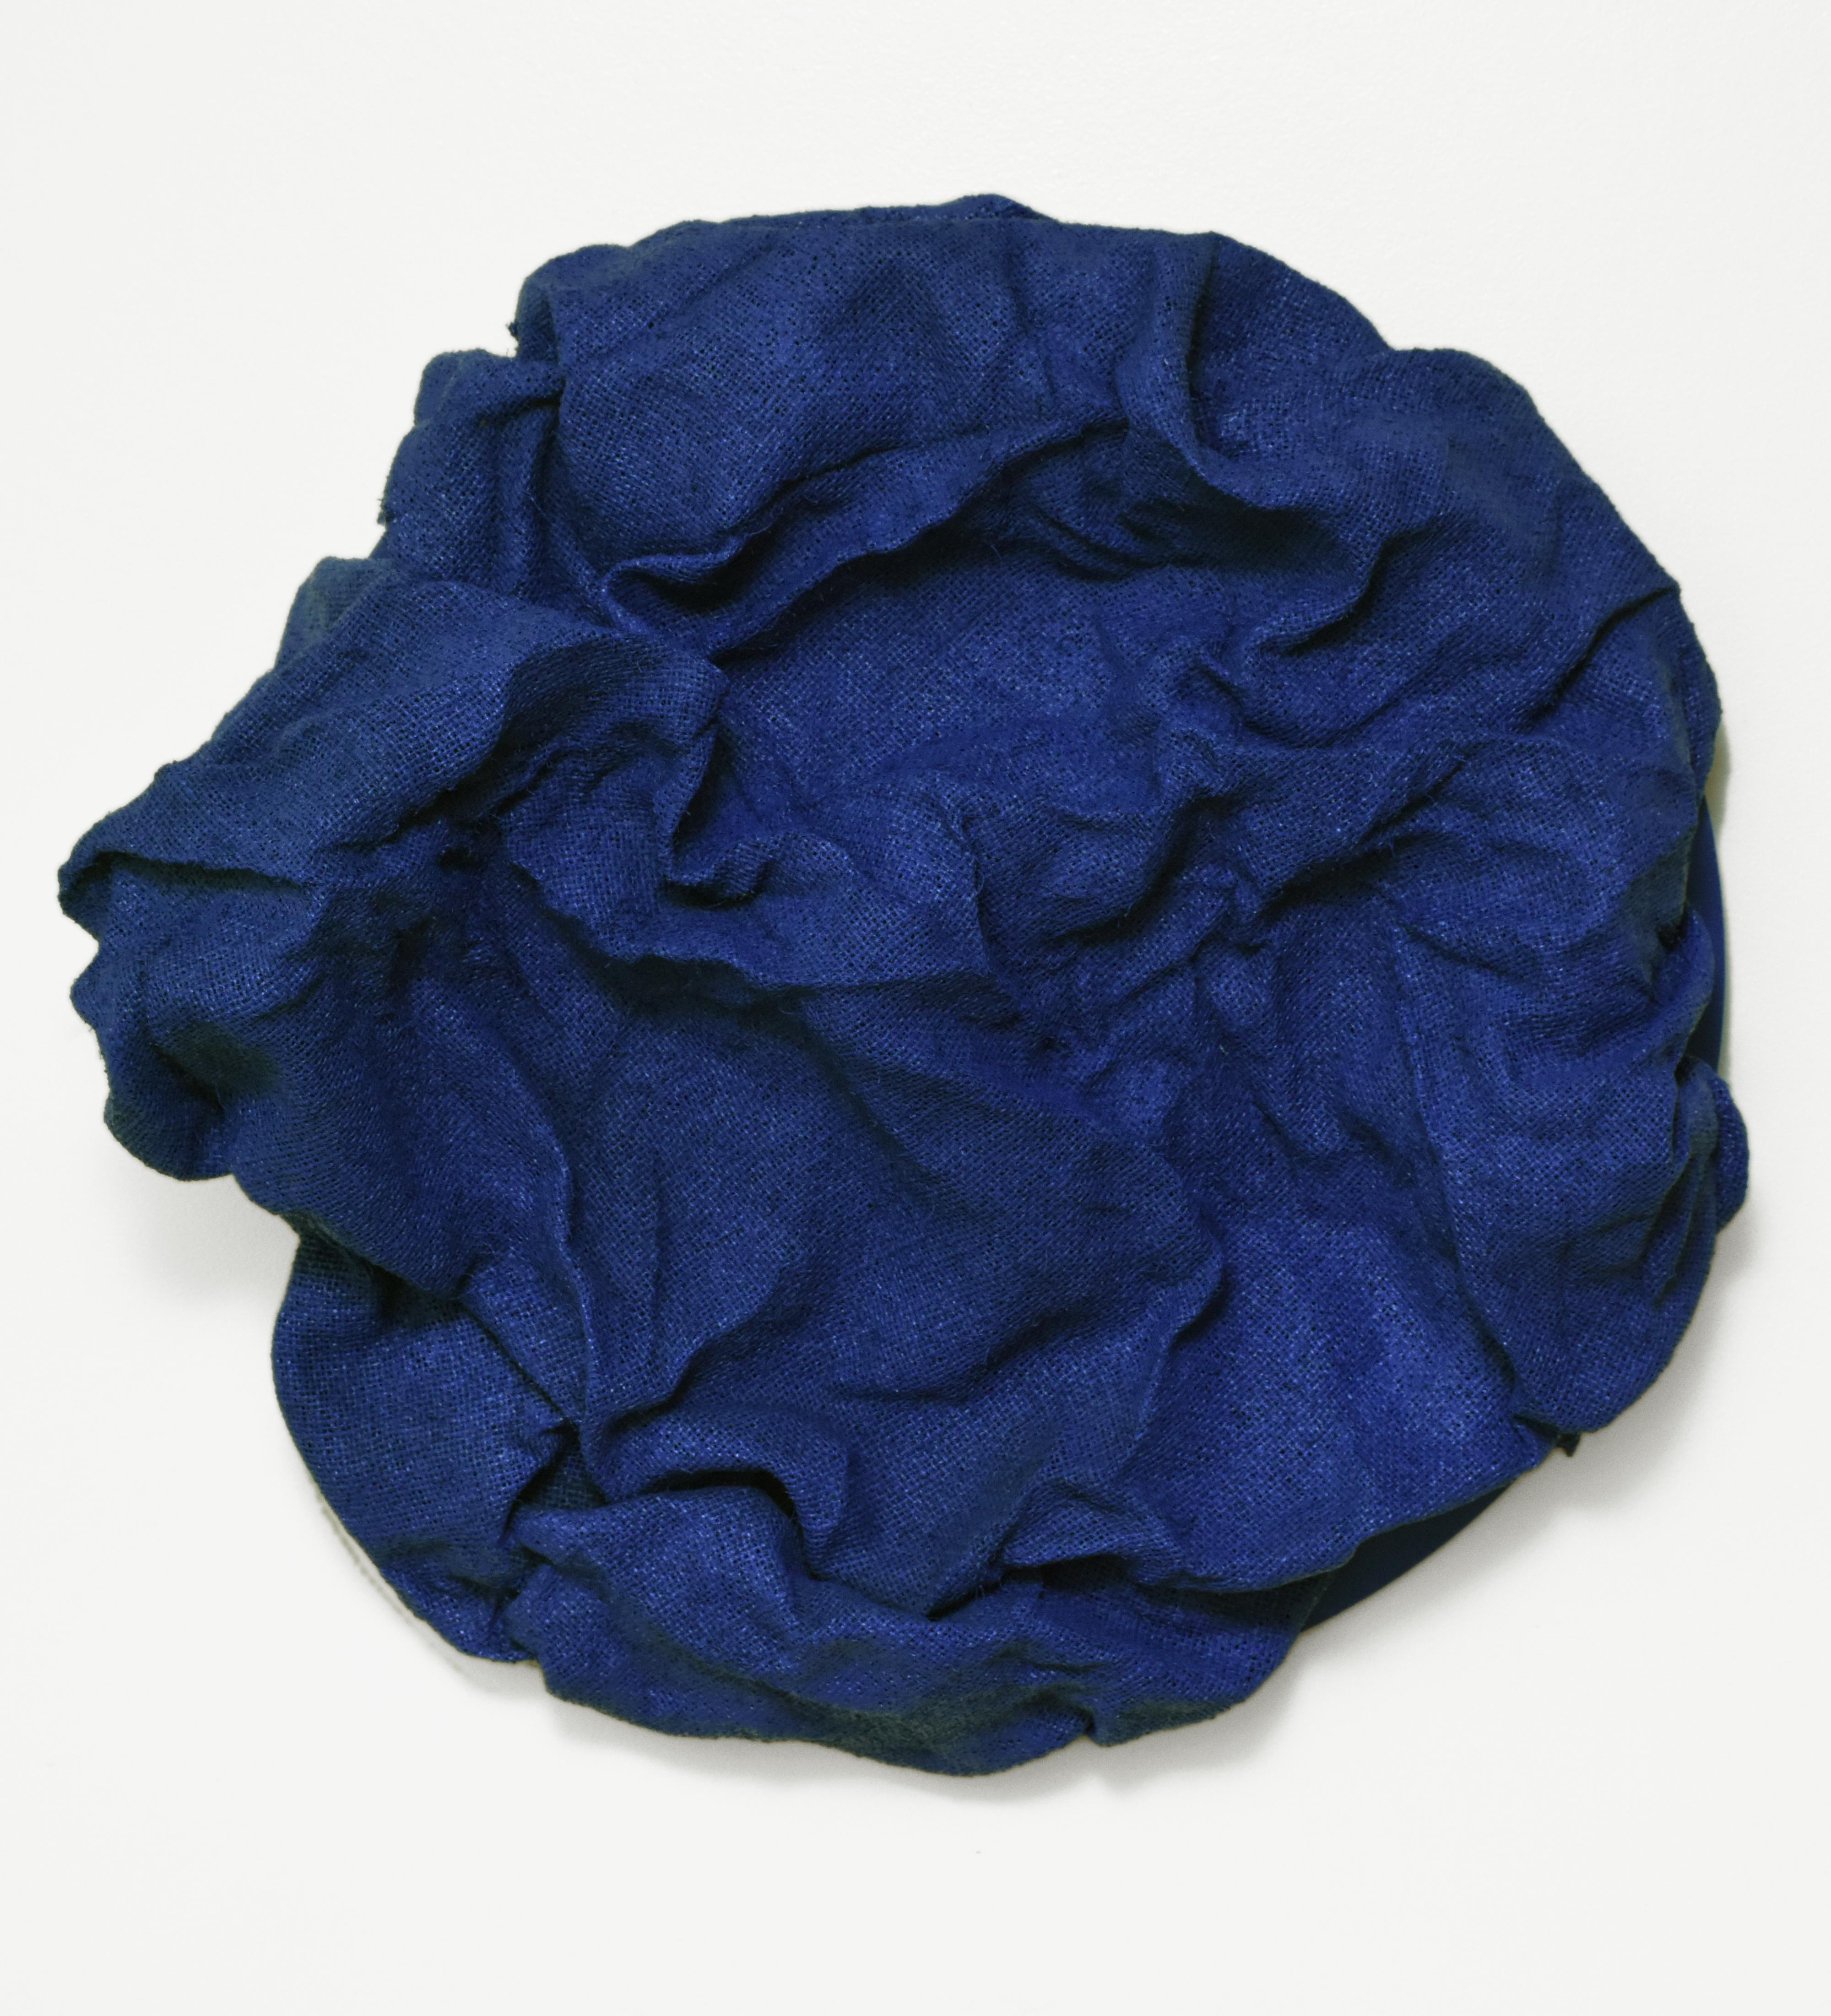 Chloe Hedden Abstract Sculpture - Iris Blue Folds (navy blue, dark blue, hard fabric, contemporary design, textile